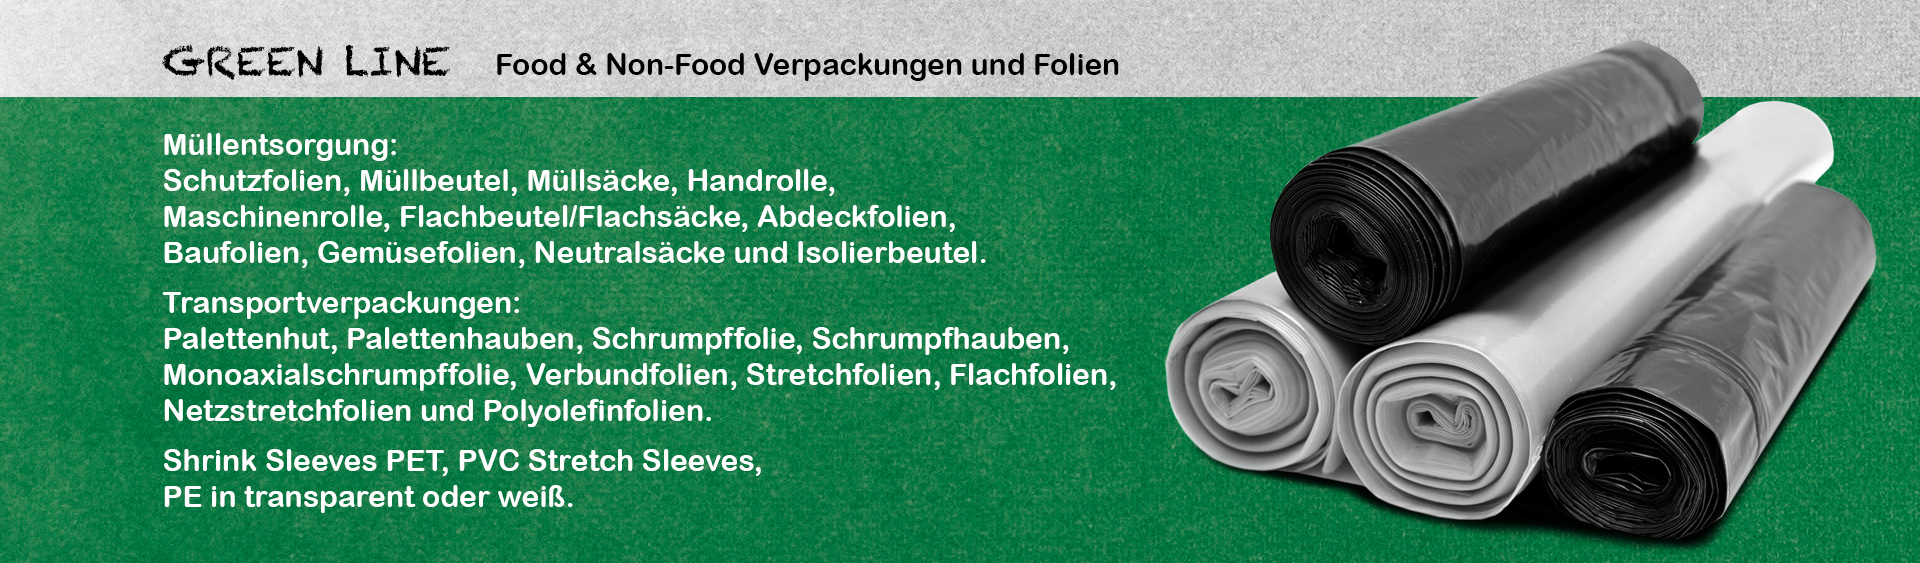 Austria Packaging Solution GreenLine Food NonFood Verpackungen